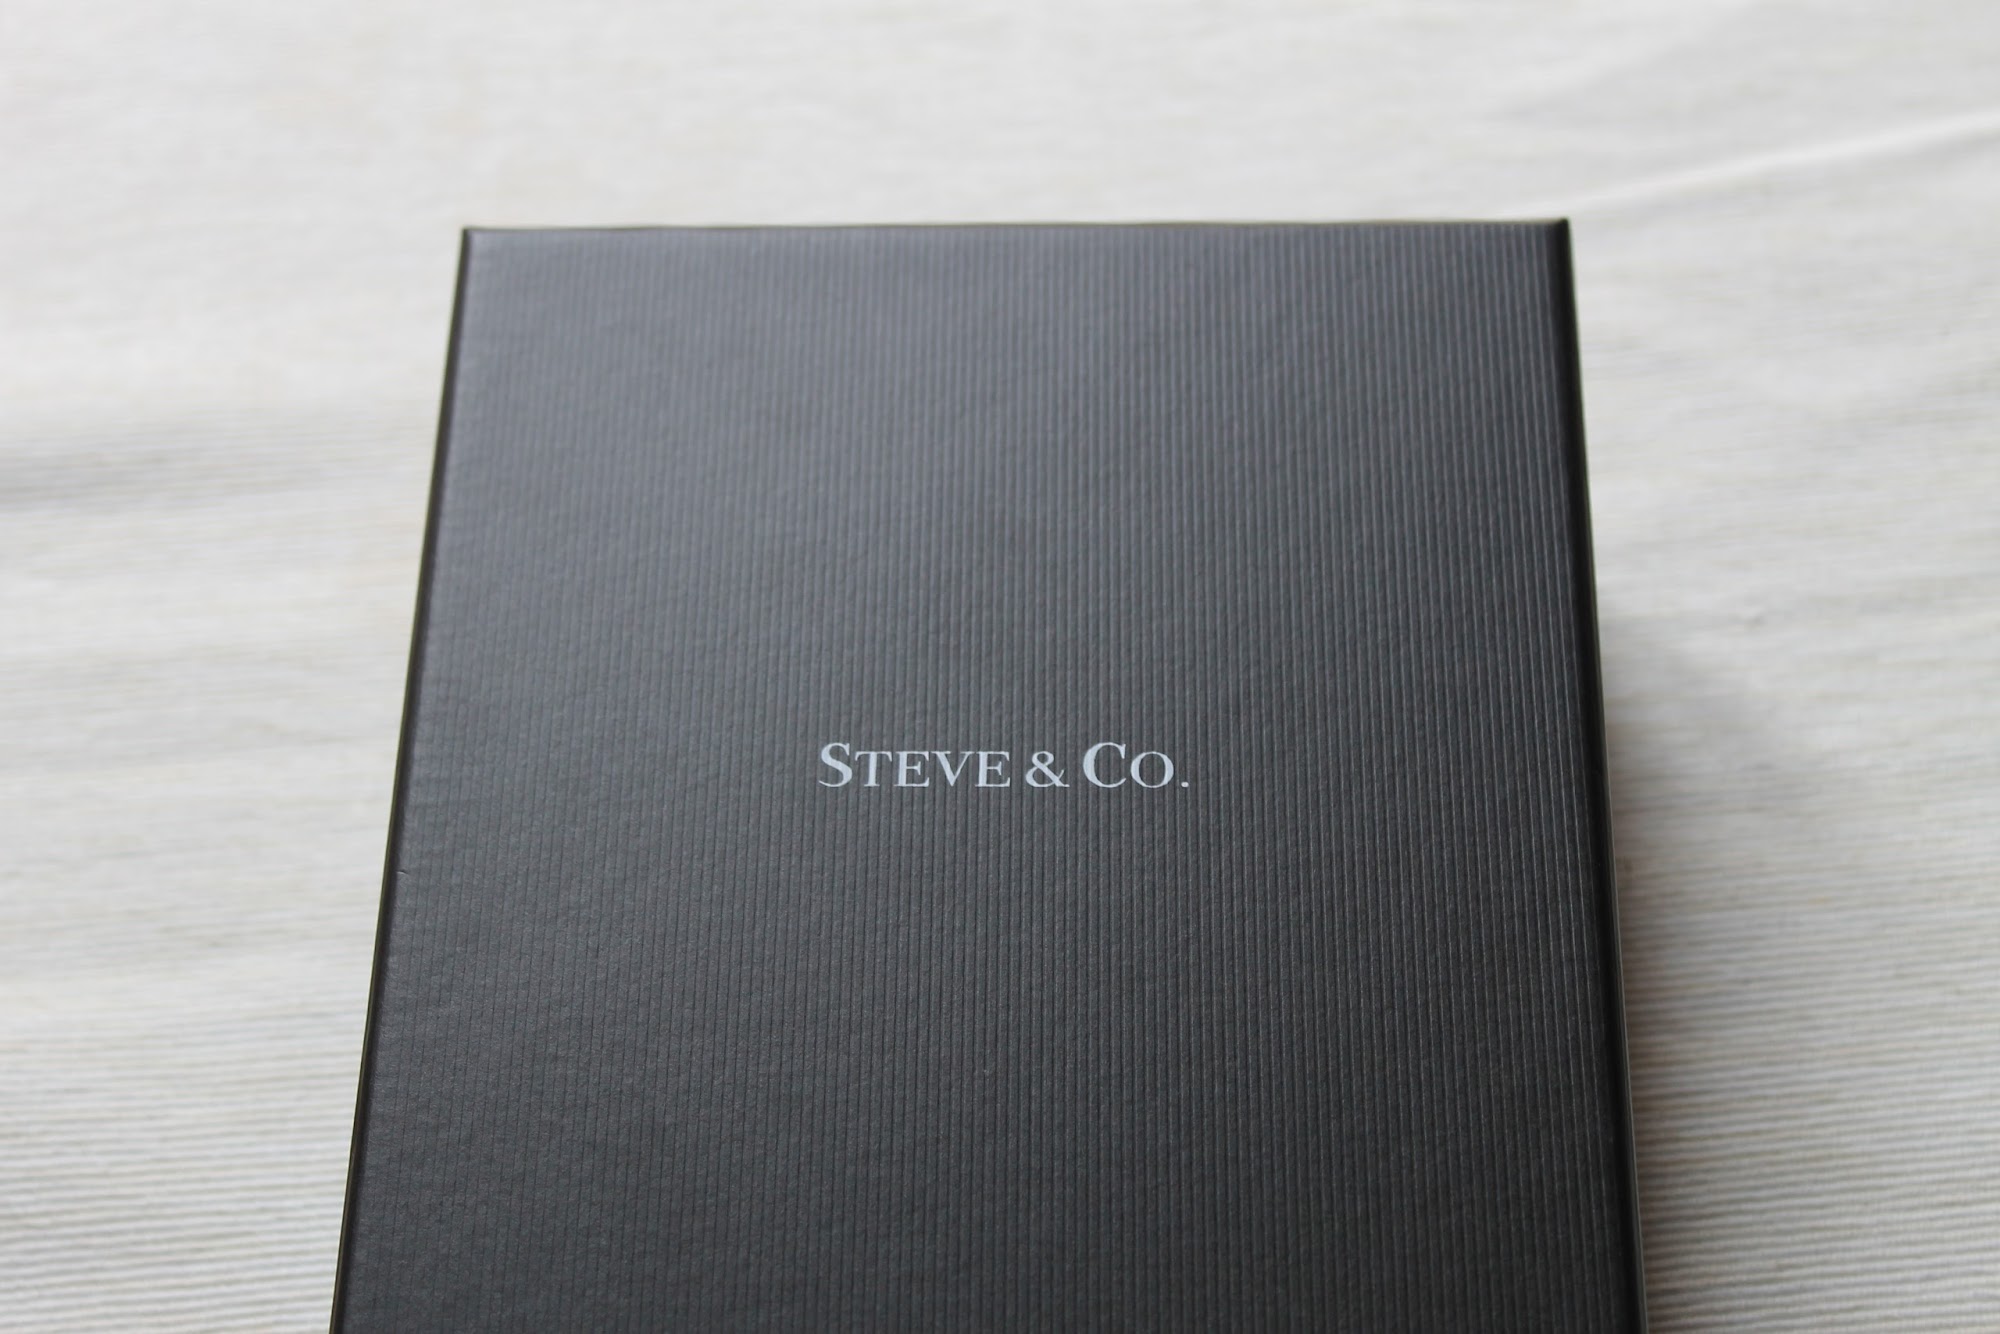 Steve & Co. Gifts